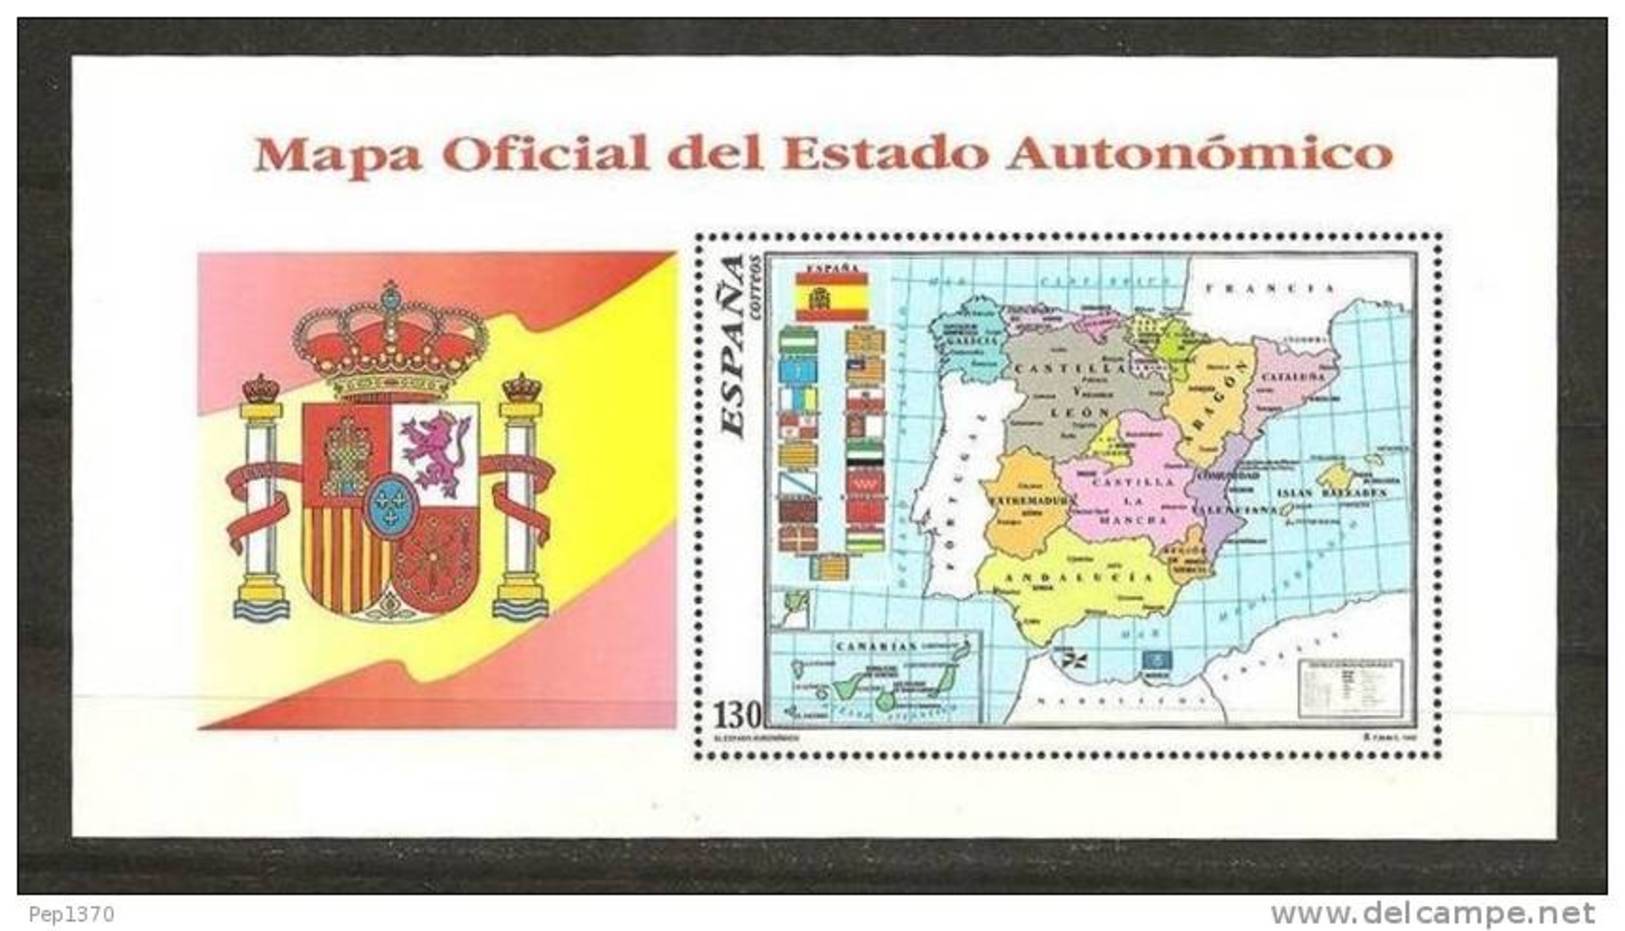 ESPAÑA 1996 - MAPA OFICIAL DEL ESTADO AUTONOMICA - Edifil Nº 3460 - Yvert Nº 3039 Block 73 - Nuevos